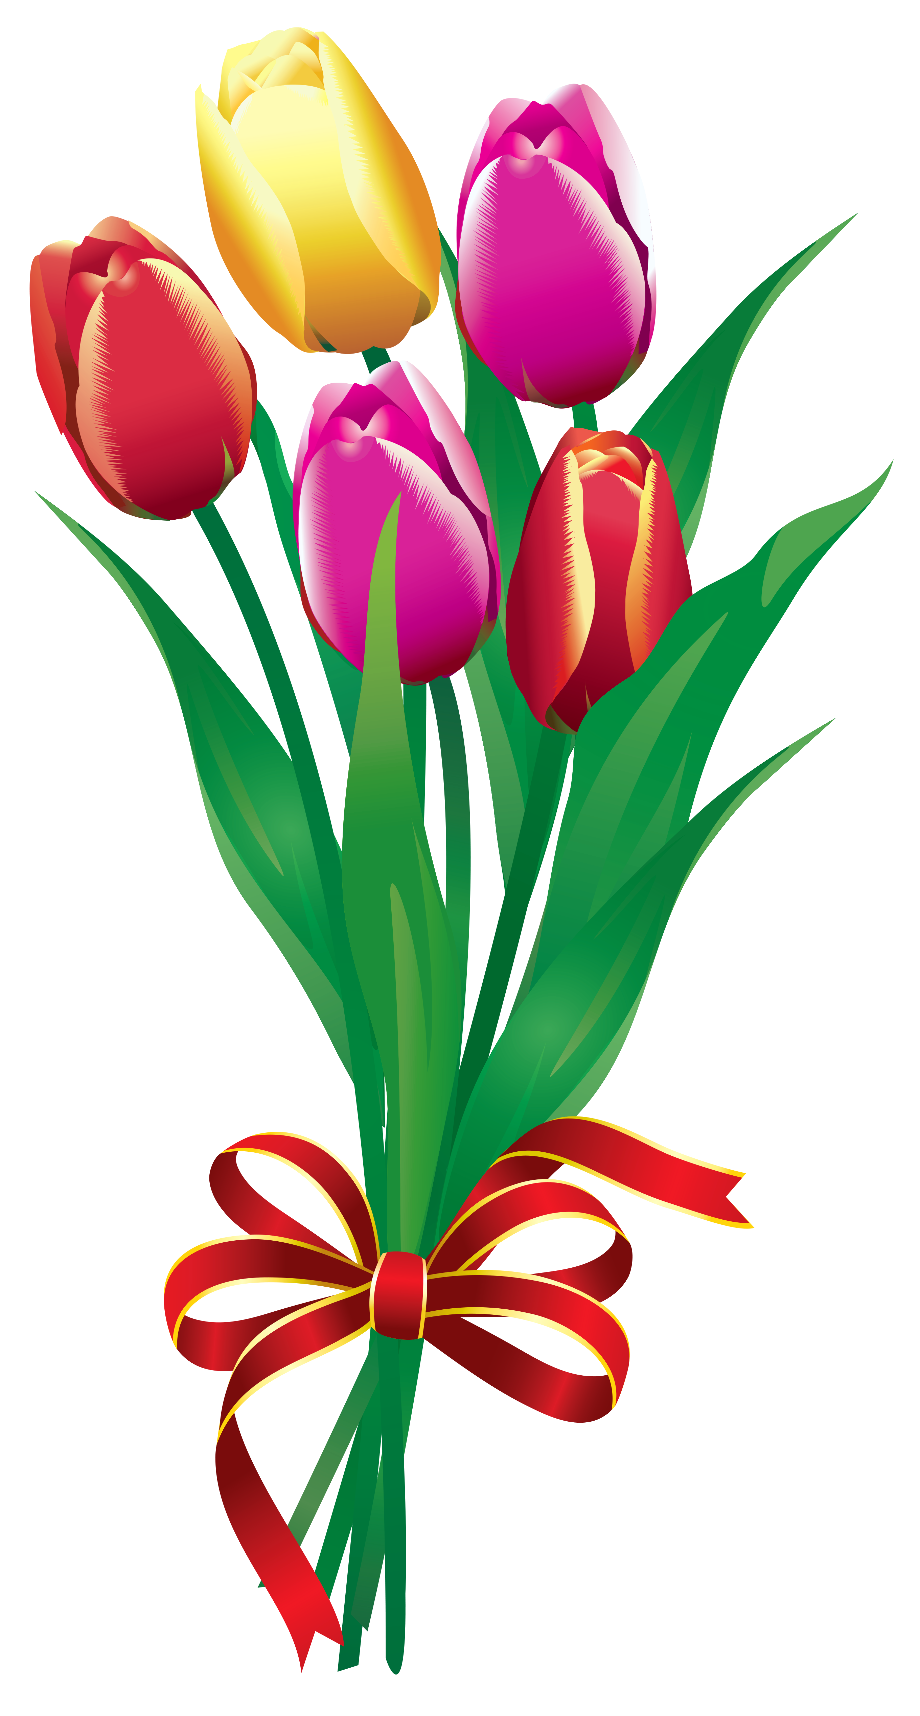 pink-flower-clip-art-at-clker-vector-clip-art-online-royalty-free-public-domain